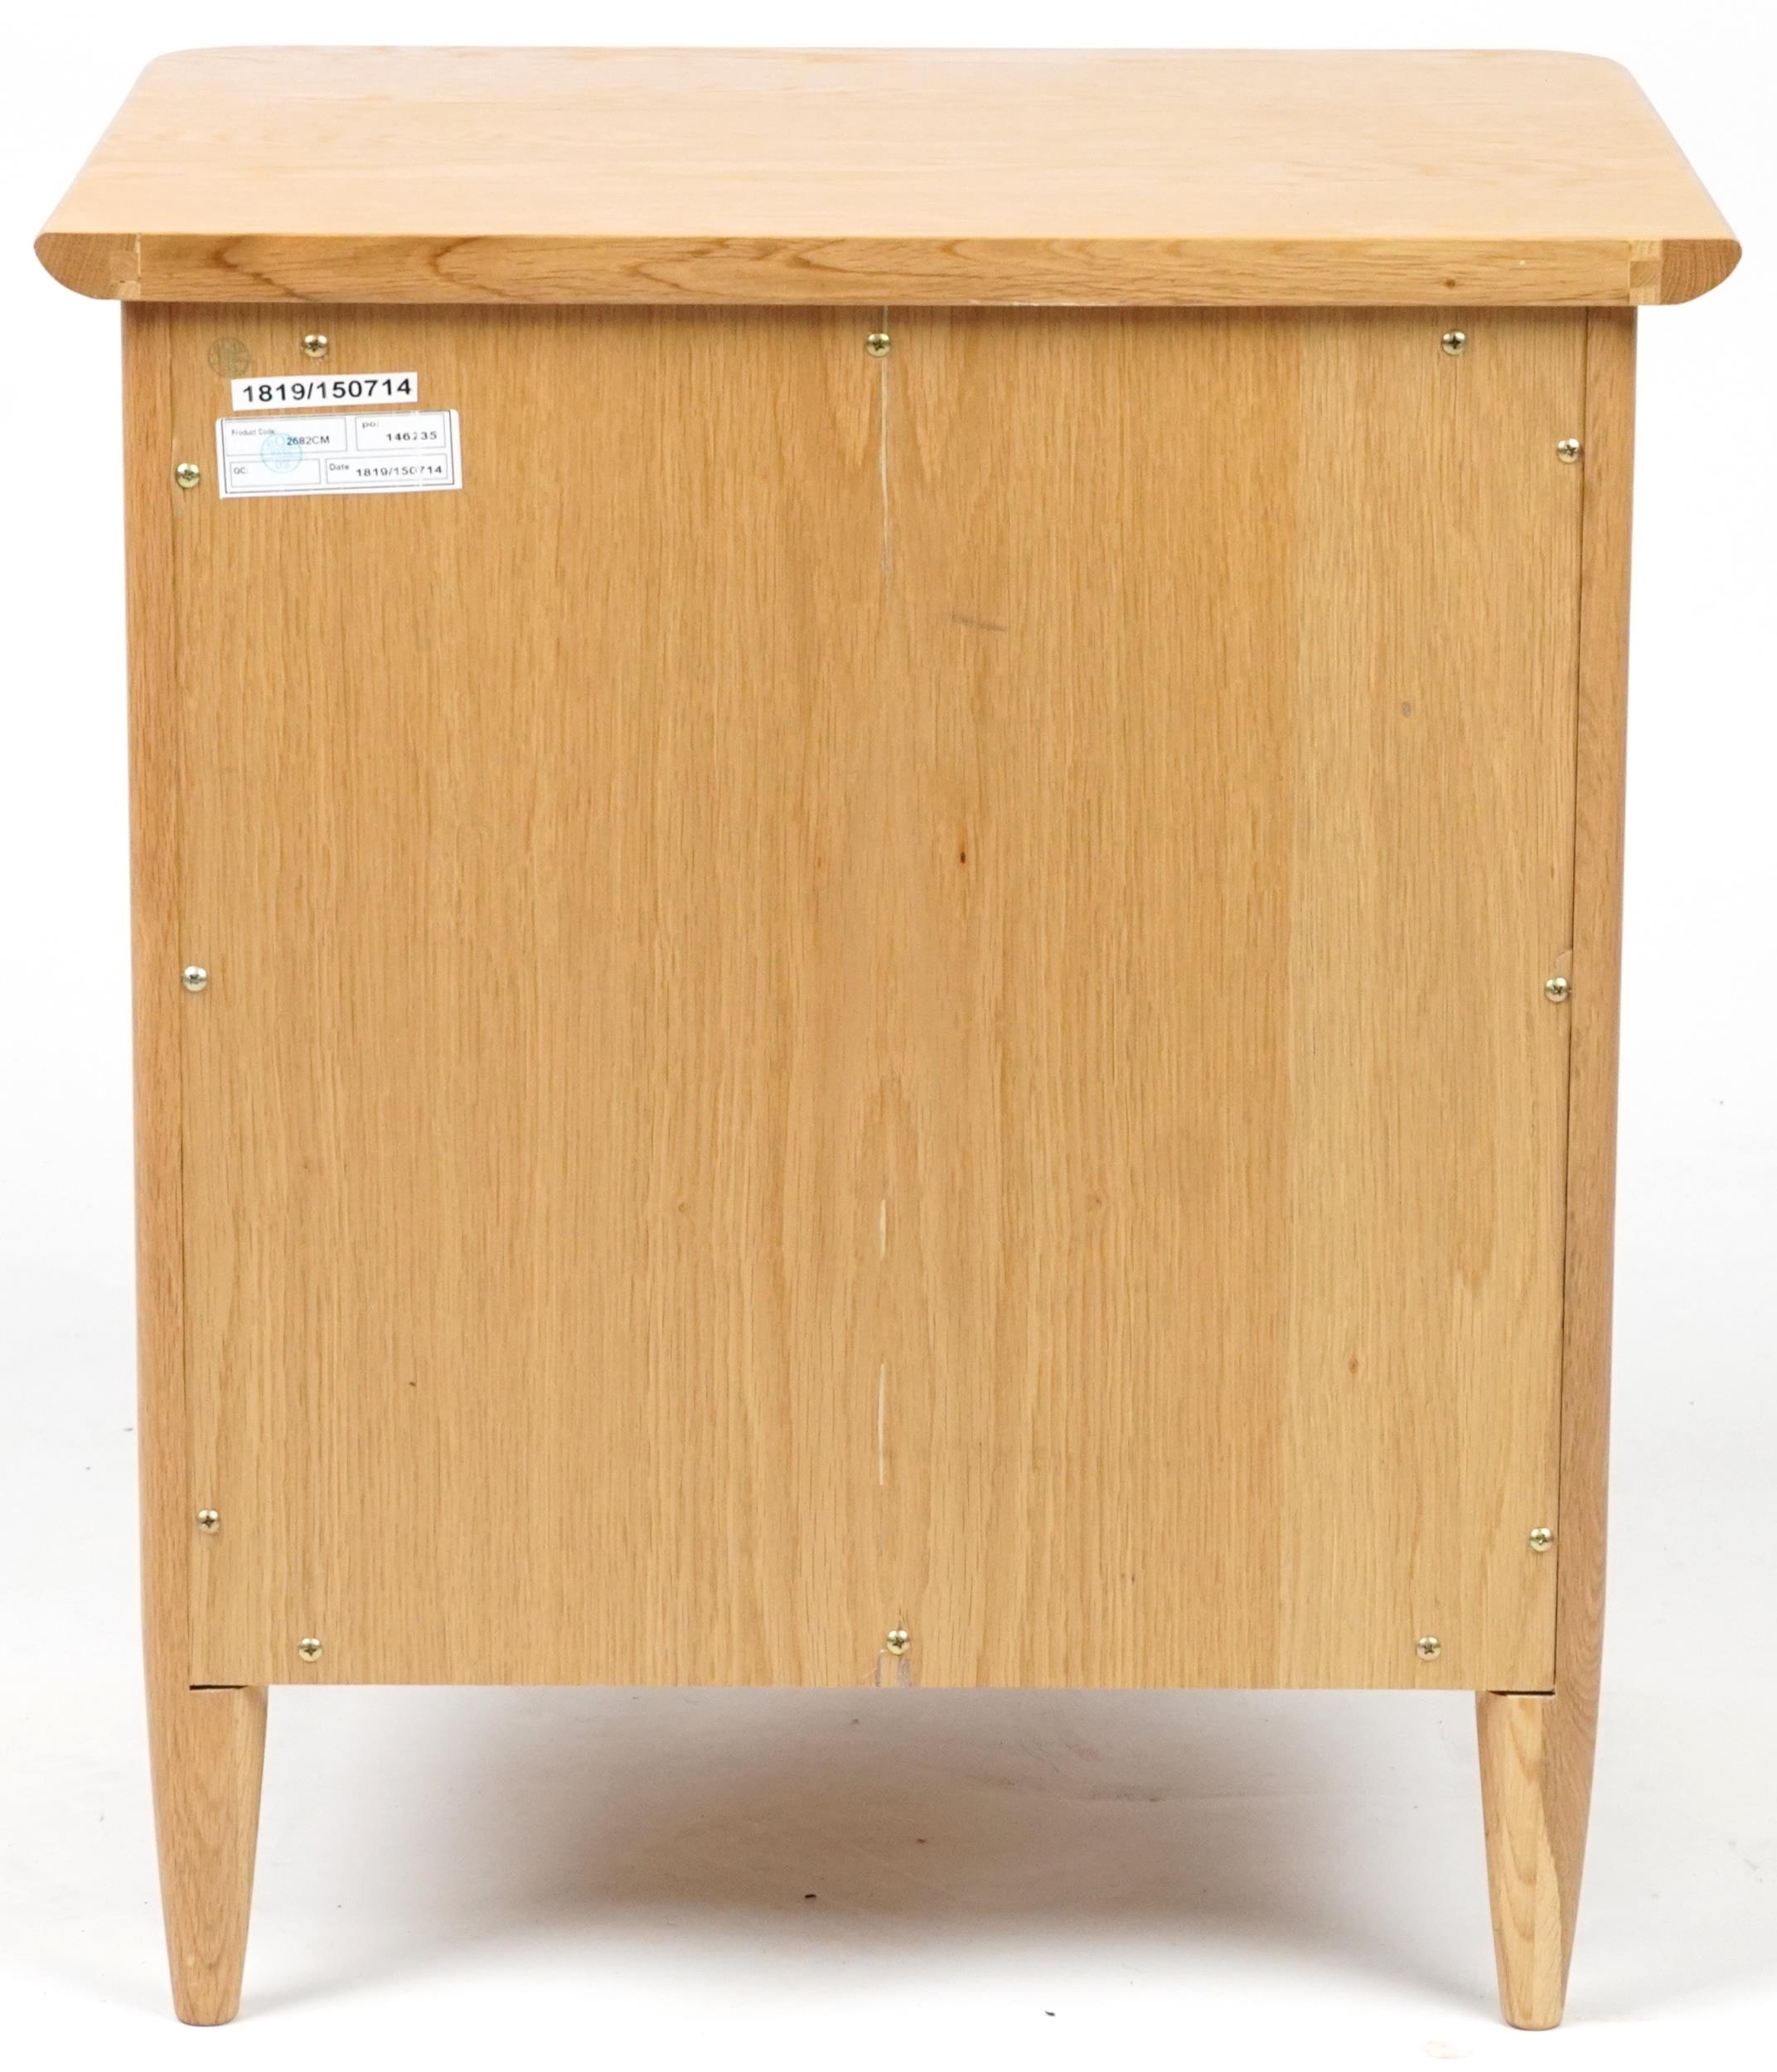 Ercol Teramo contemporary light oak two drawer bedside chest, 60cm H x 53cm W x 47cm D - Image 4 of 6